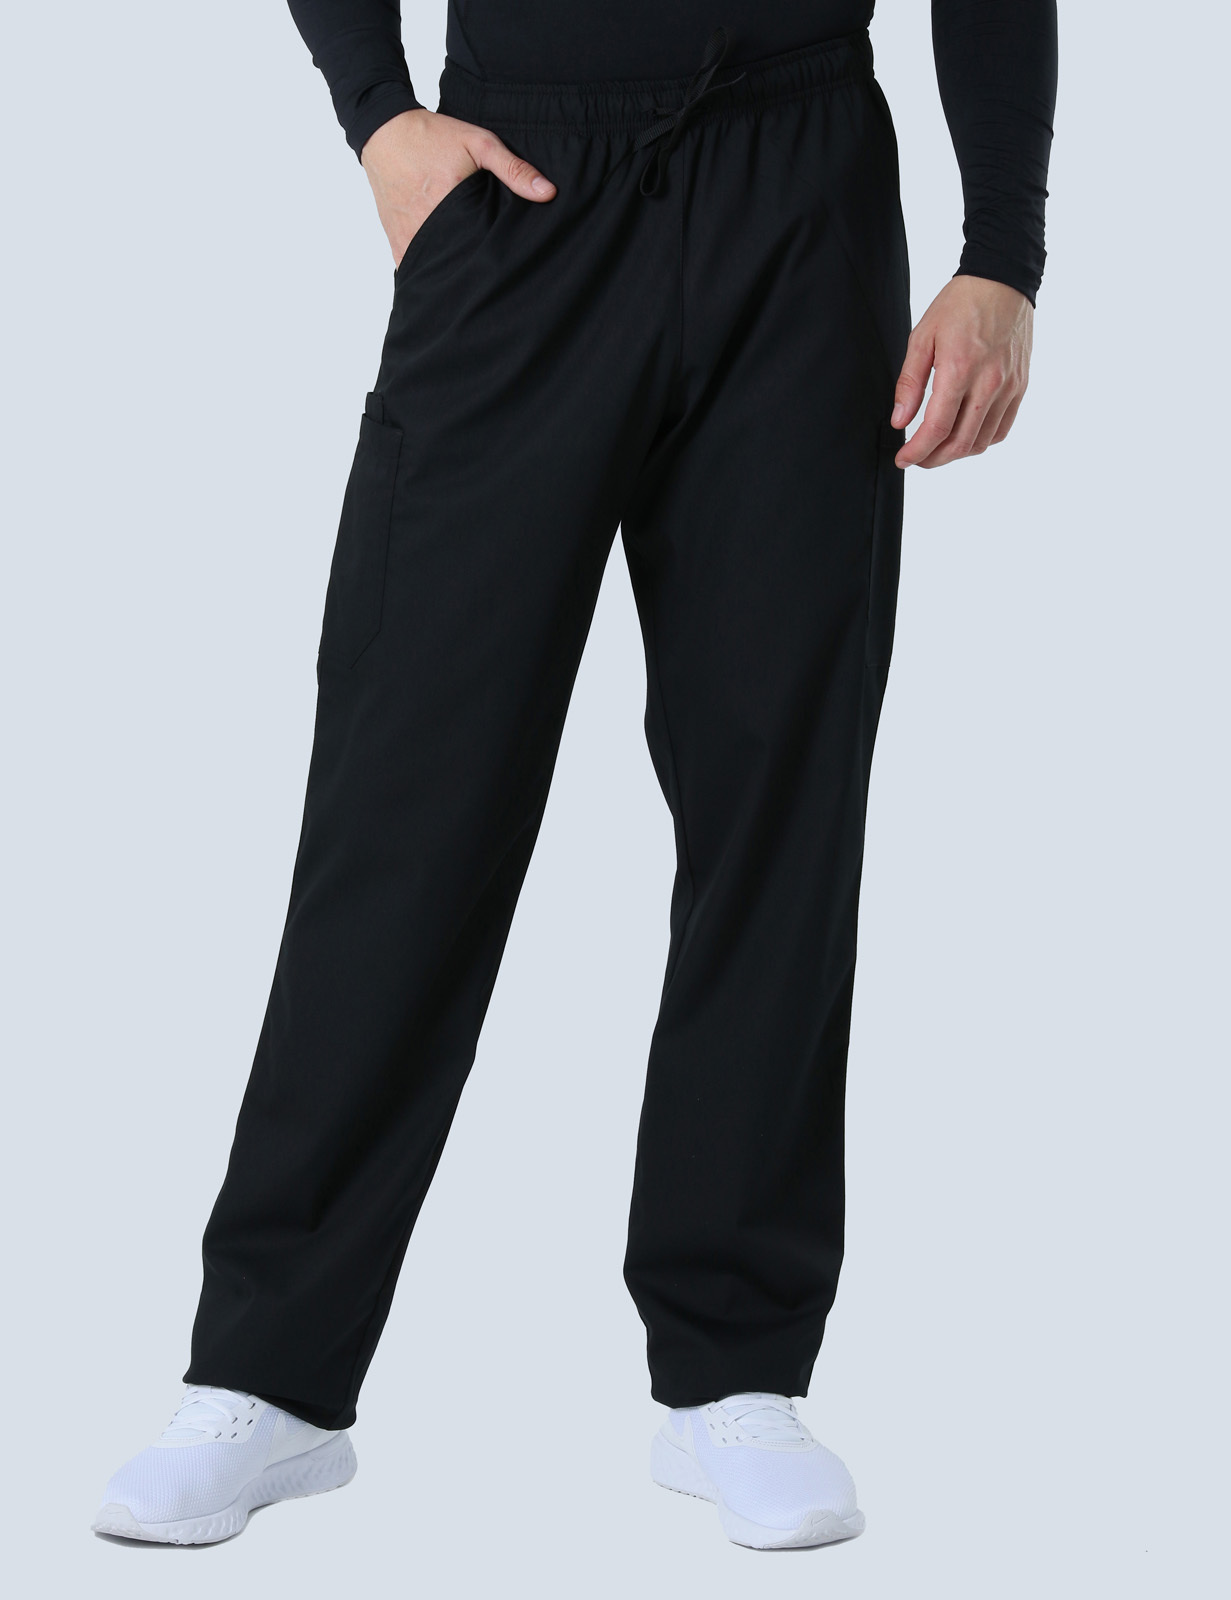 Men's Cargo Performance Pants - Black - 3X Large